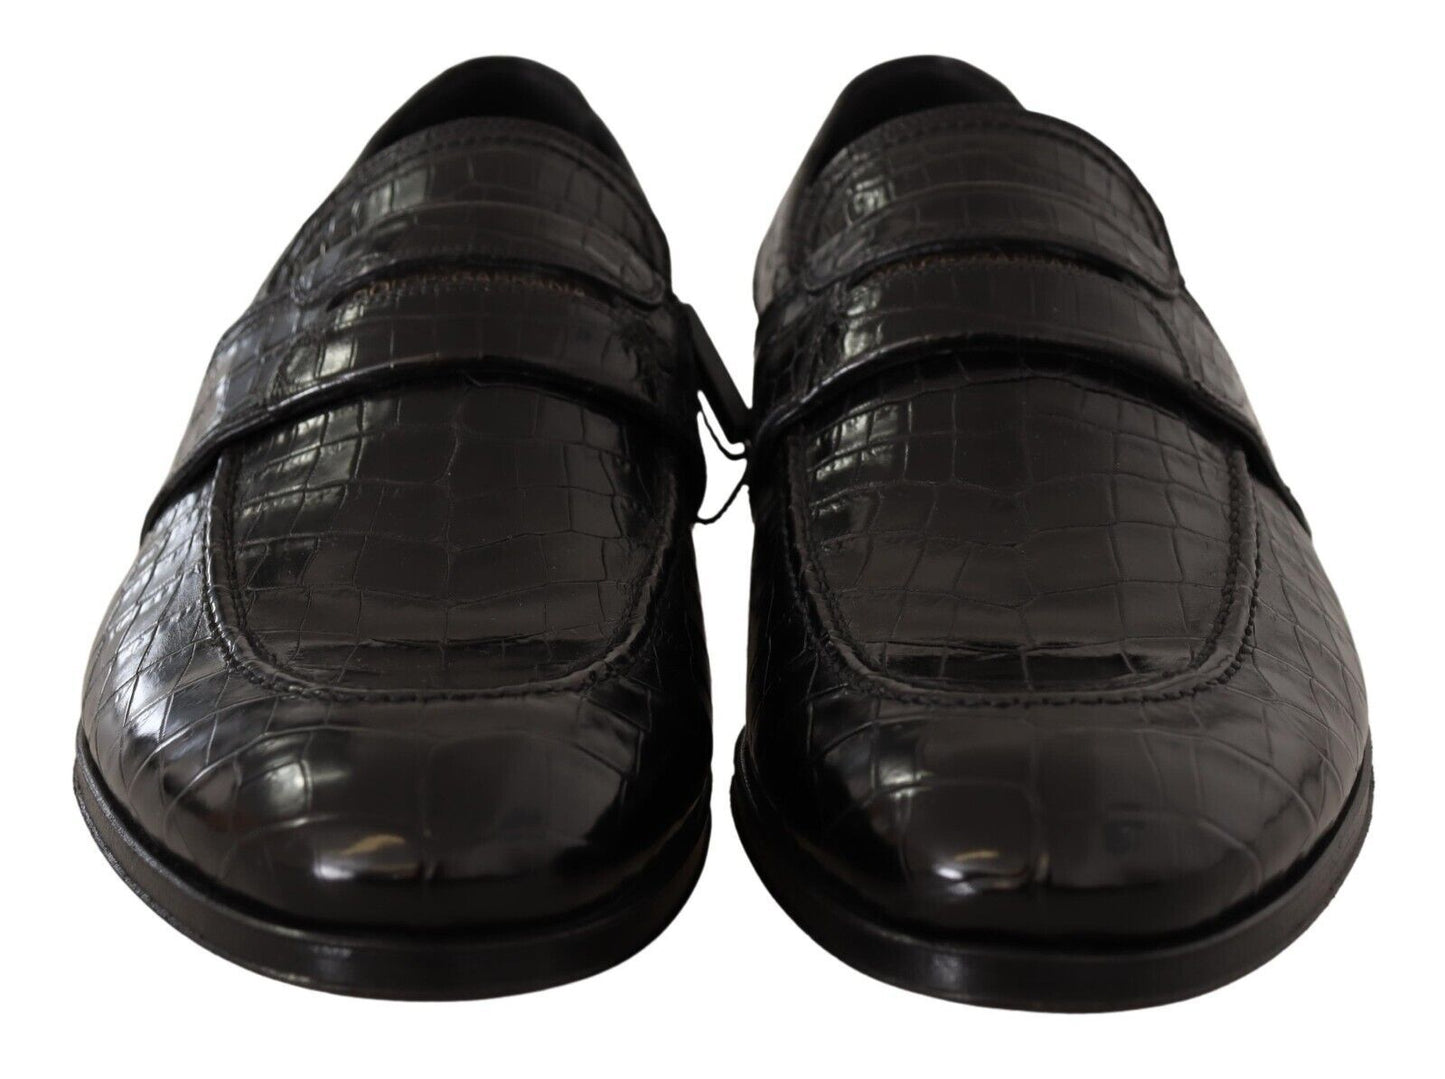 Dolce & Gabbana Black Crocodile en cuir Slip on Moccasin Chaussures